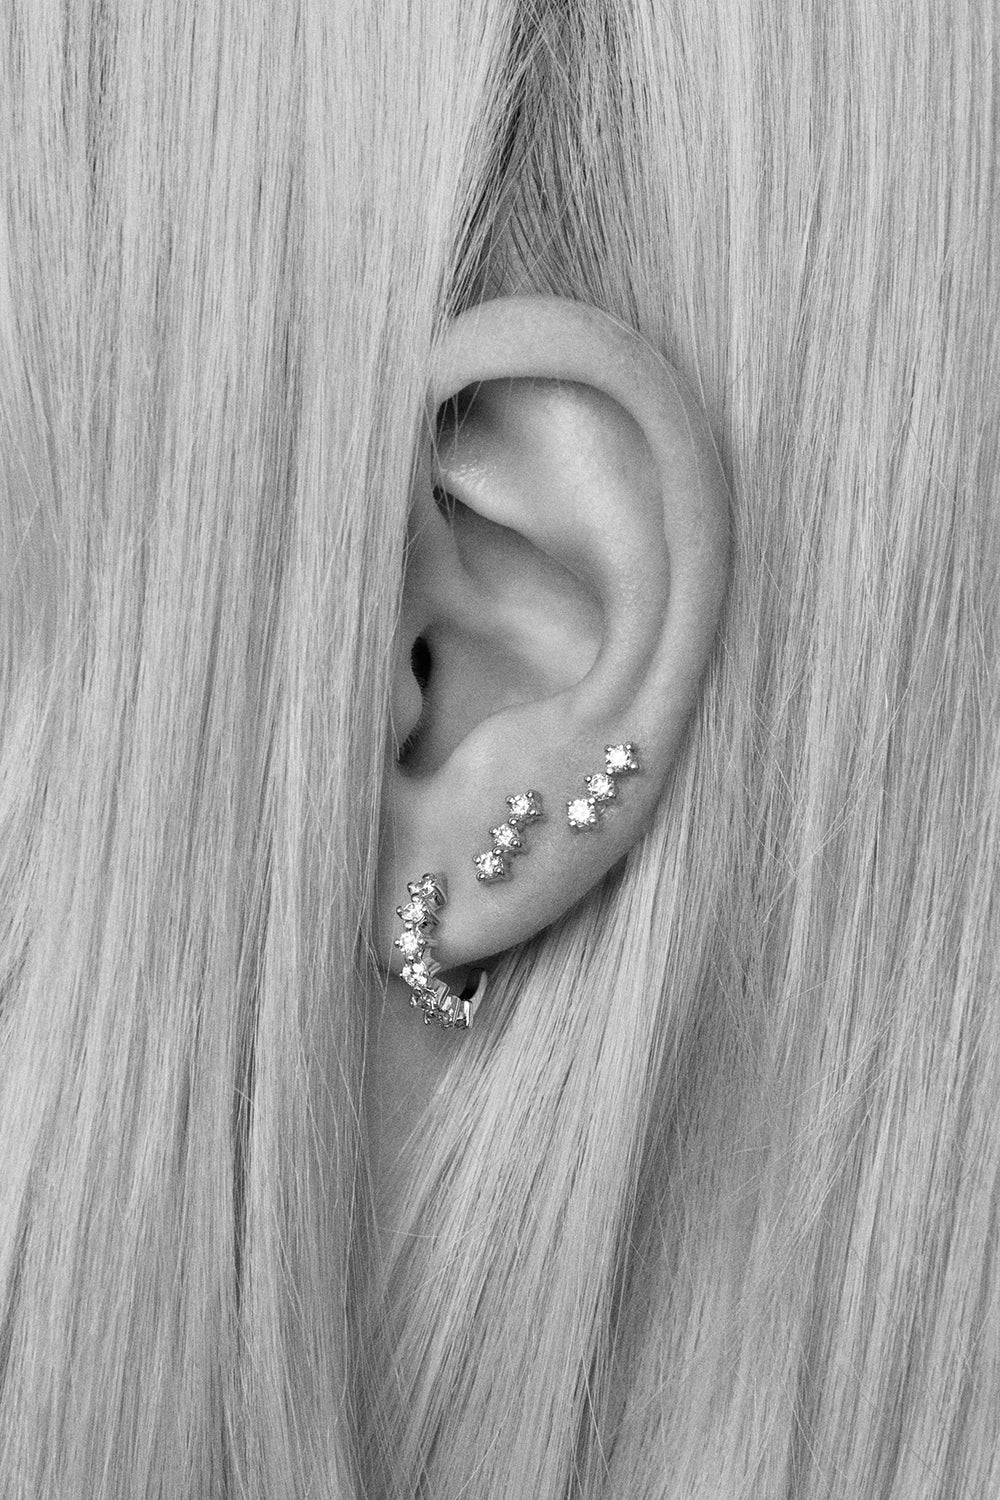 Buttercup Diamond Bar Earrings | 9K White Gold| Natasha Schweitzer